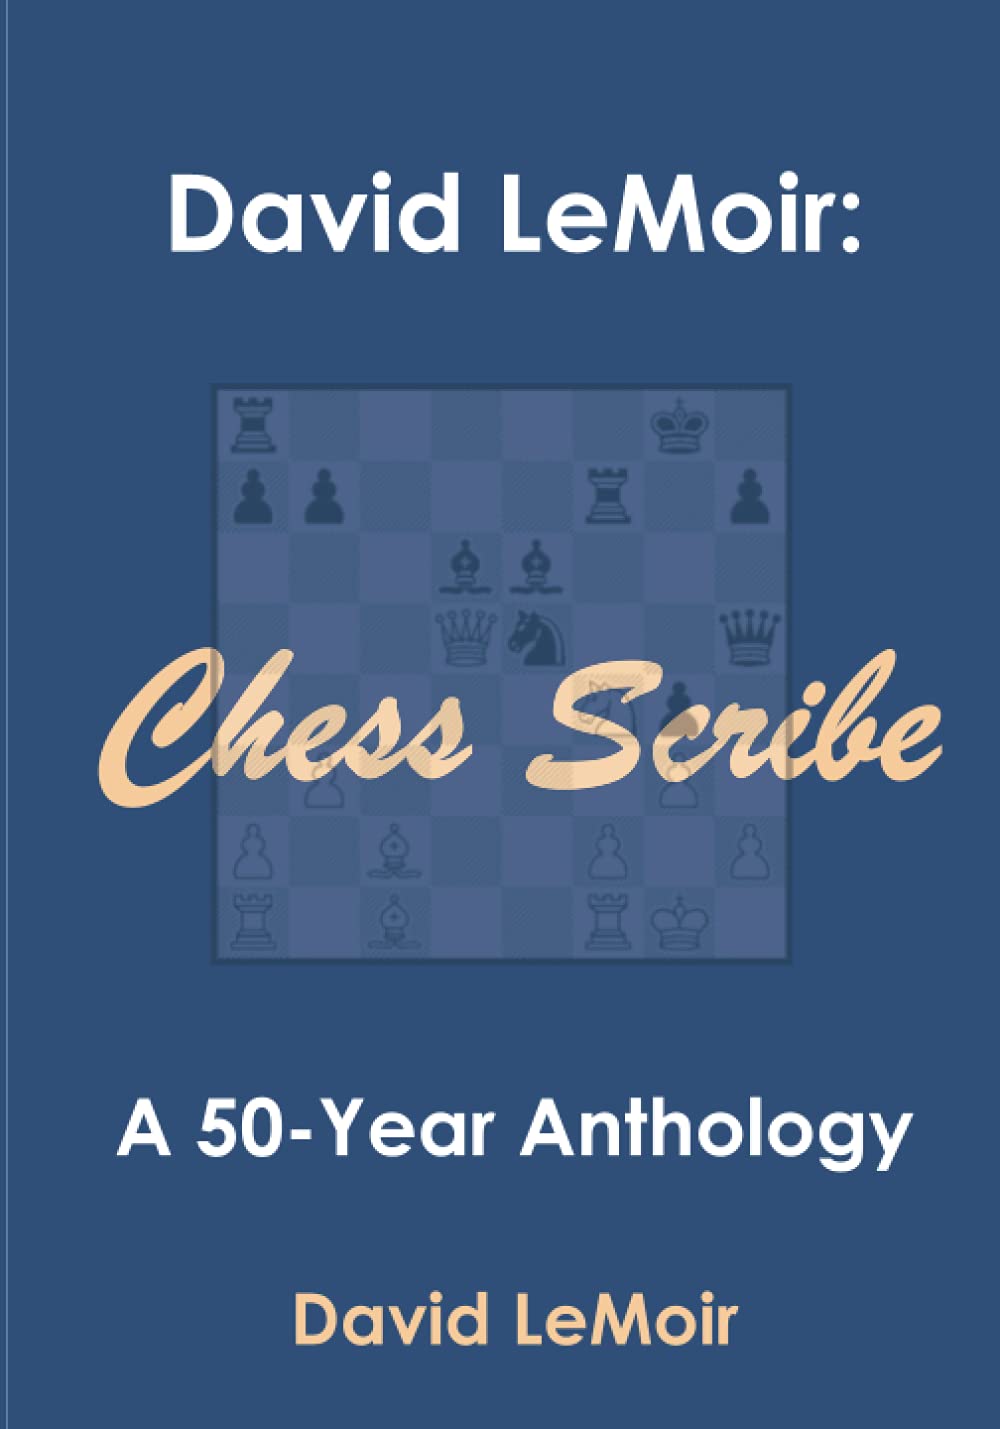 Chess Scribe: A Fifty Year Anthology, David LeMoir, Amazon Publishing, 10th April 2021, ISBN-13 ‏ : ‎ 978-1527291188